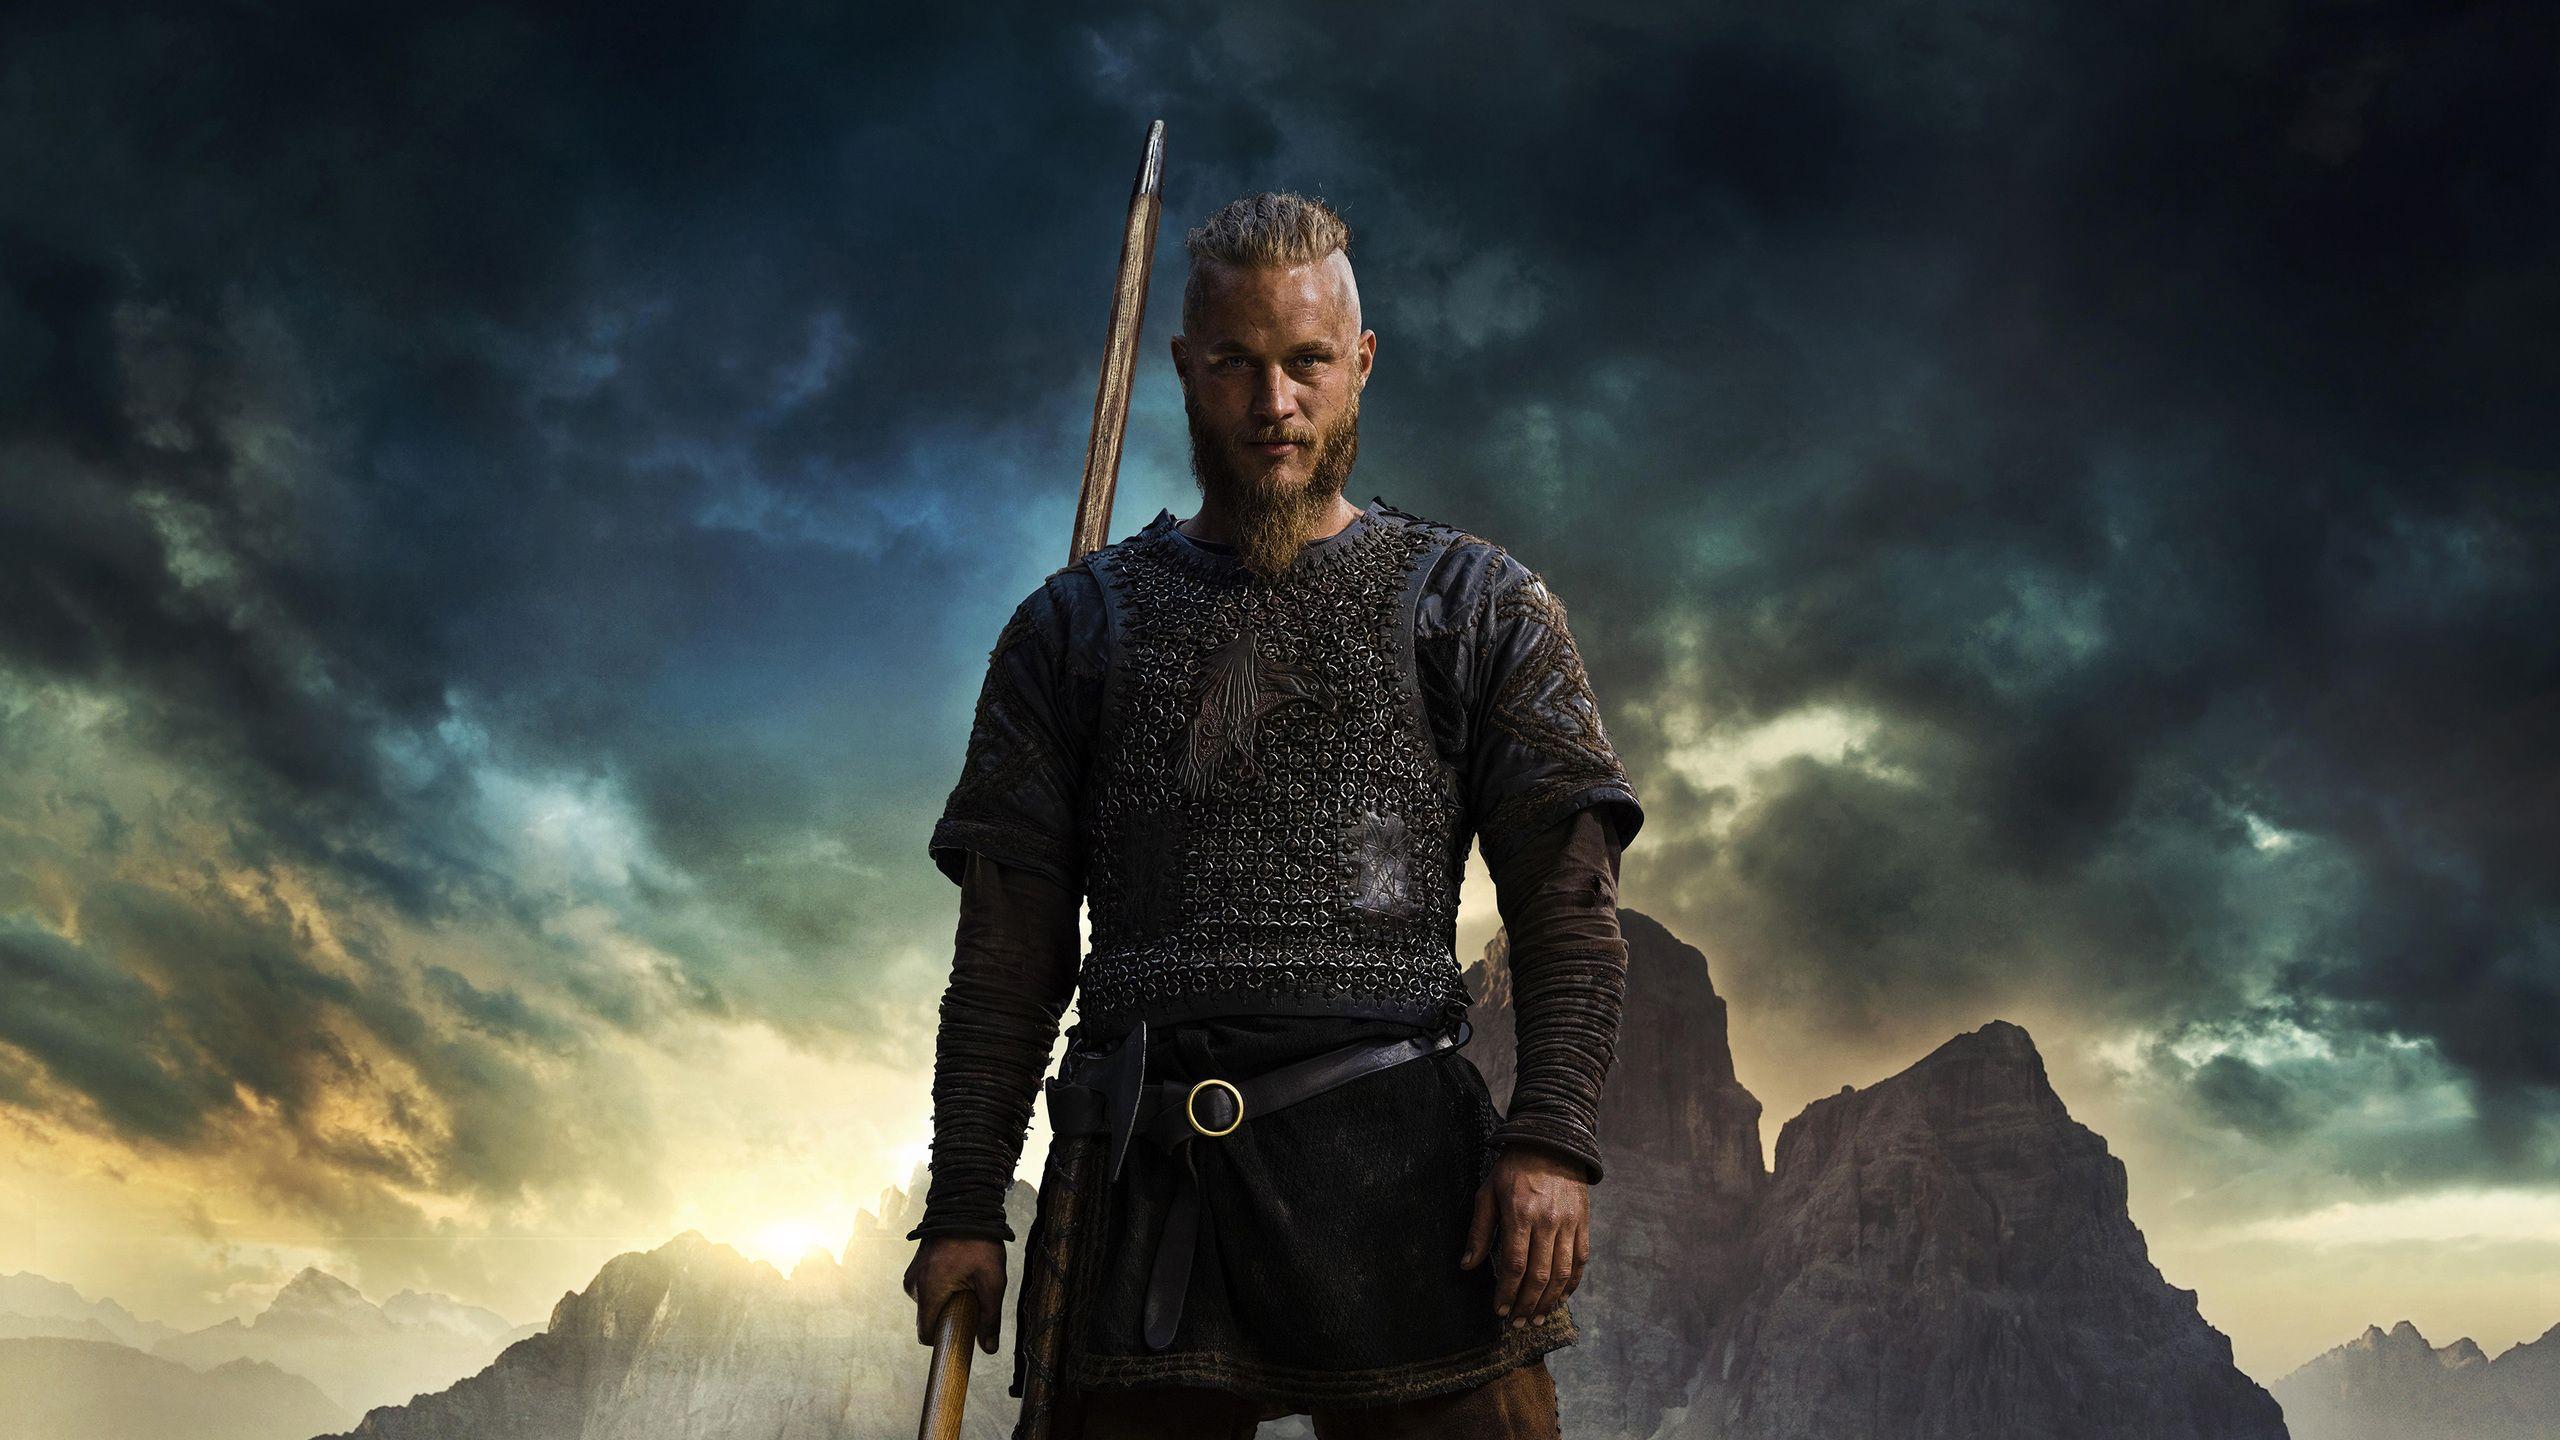 men's brown long-sleeved op Vikings (TV series) Ragnar Lodbrok #TV #1080P # wallpaper #hdwallpaper #desktop | Viking wallpaper, Vikings, Ragnar